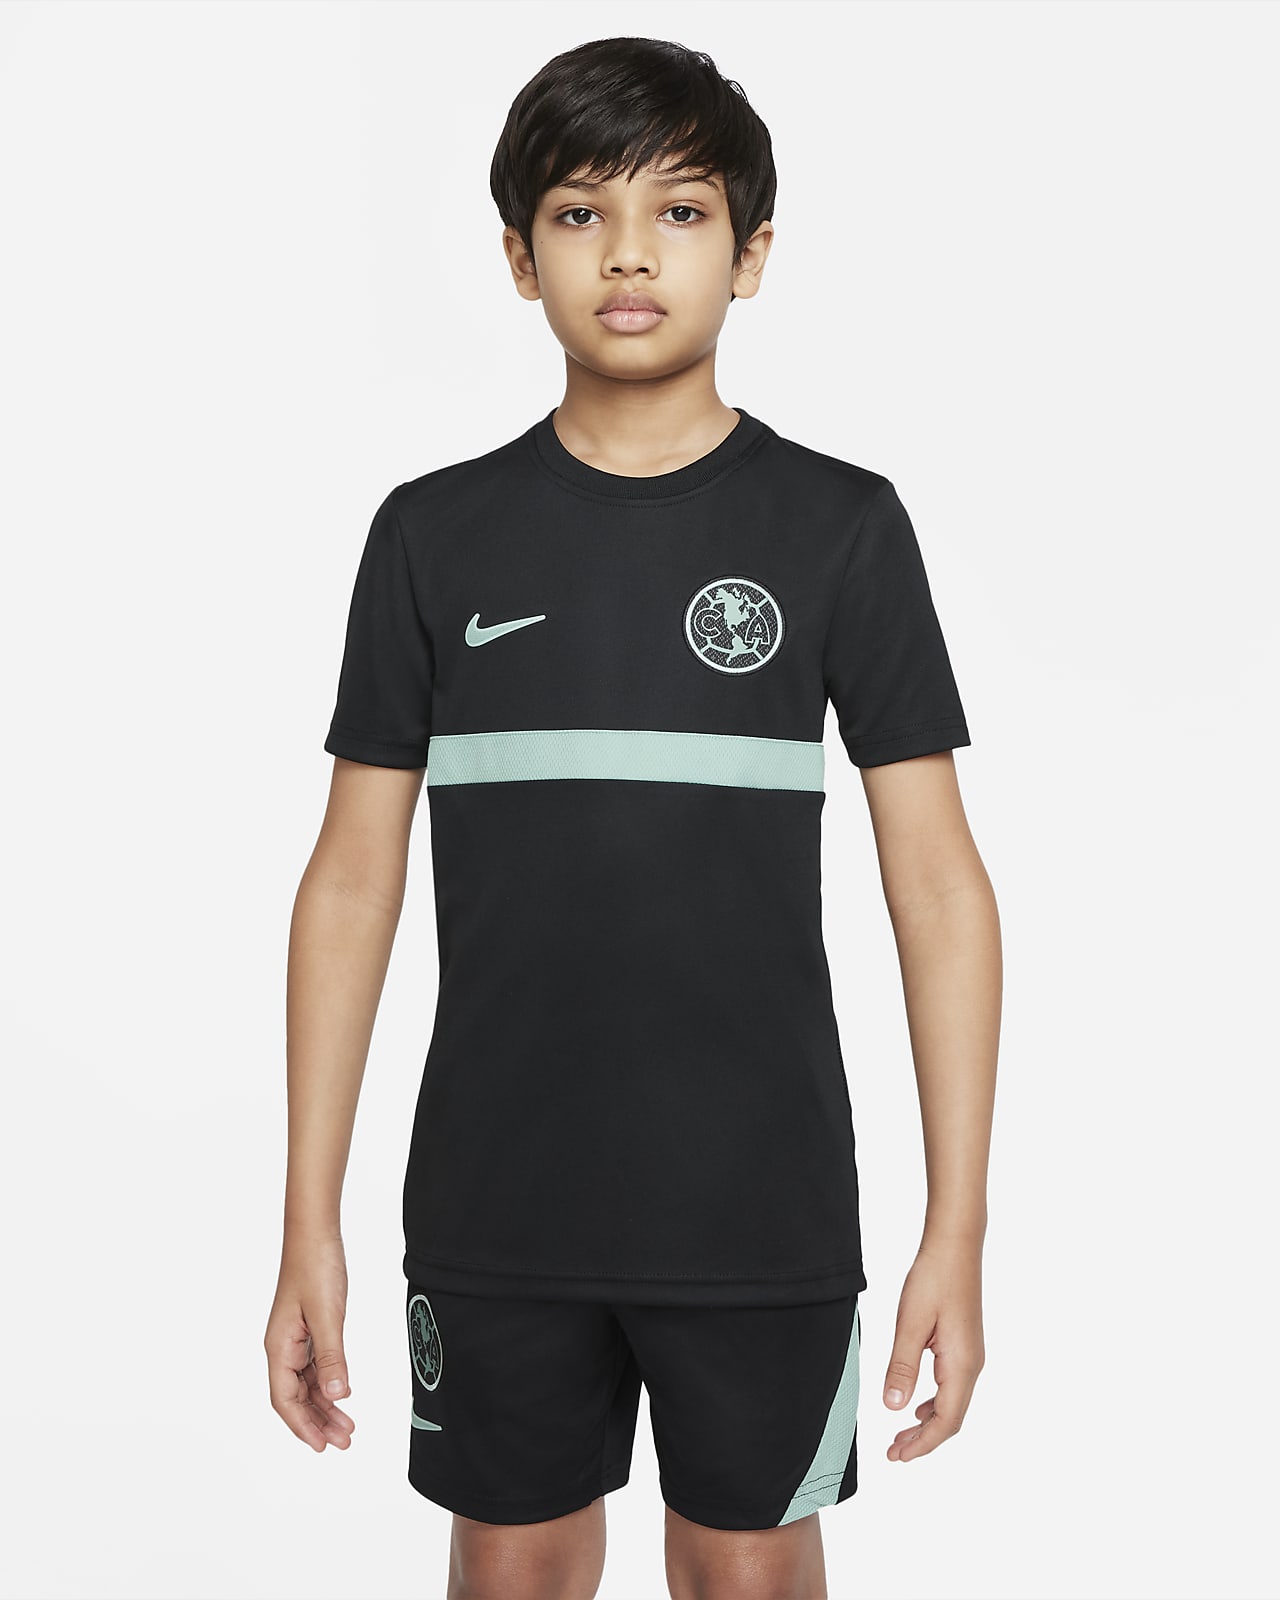 Club América Academy Pro Big Kids' Nike Dri-FIT Short-Sleeve Soccer Top.